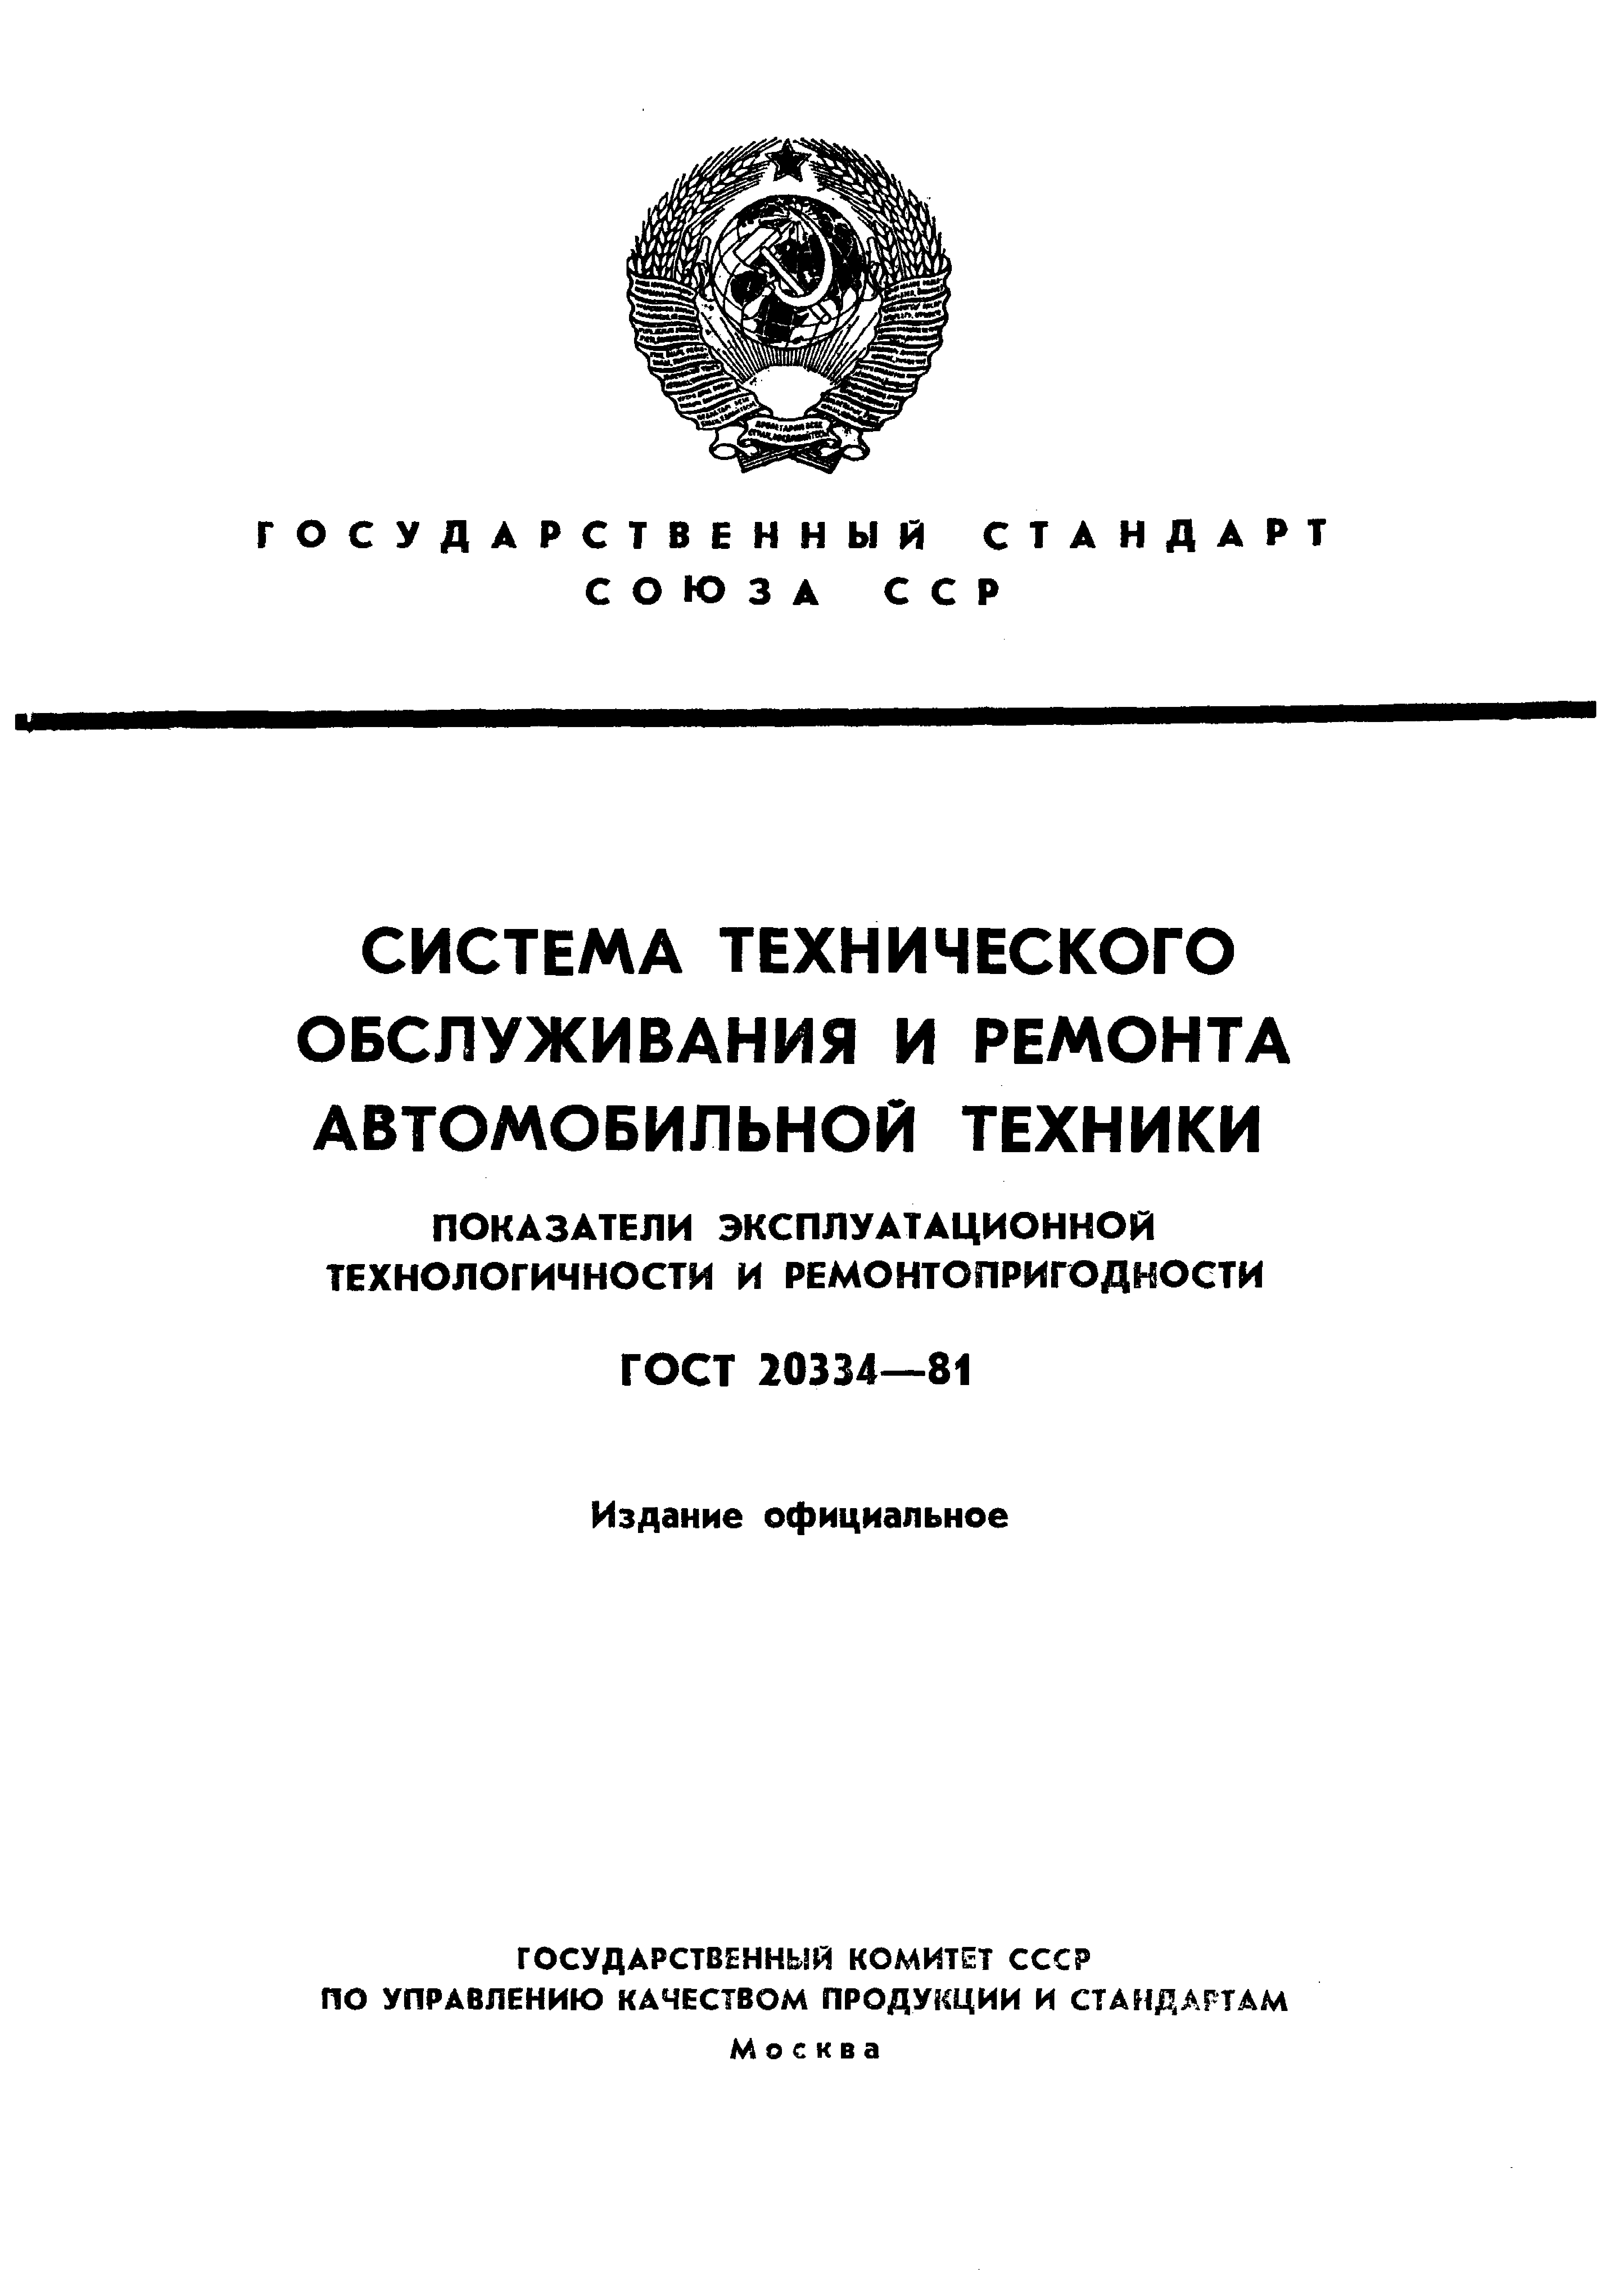 ГОСТ 20334-81